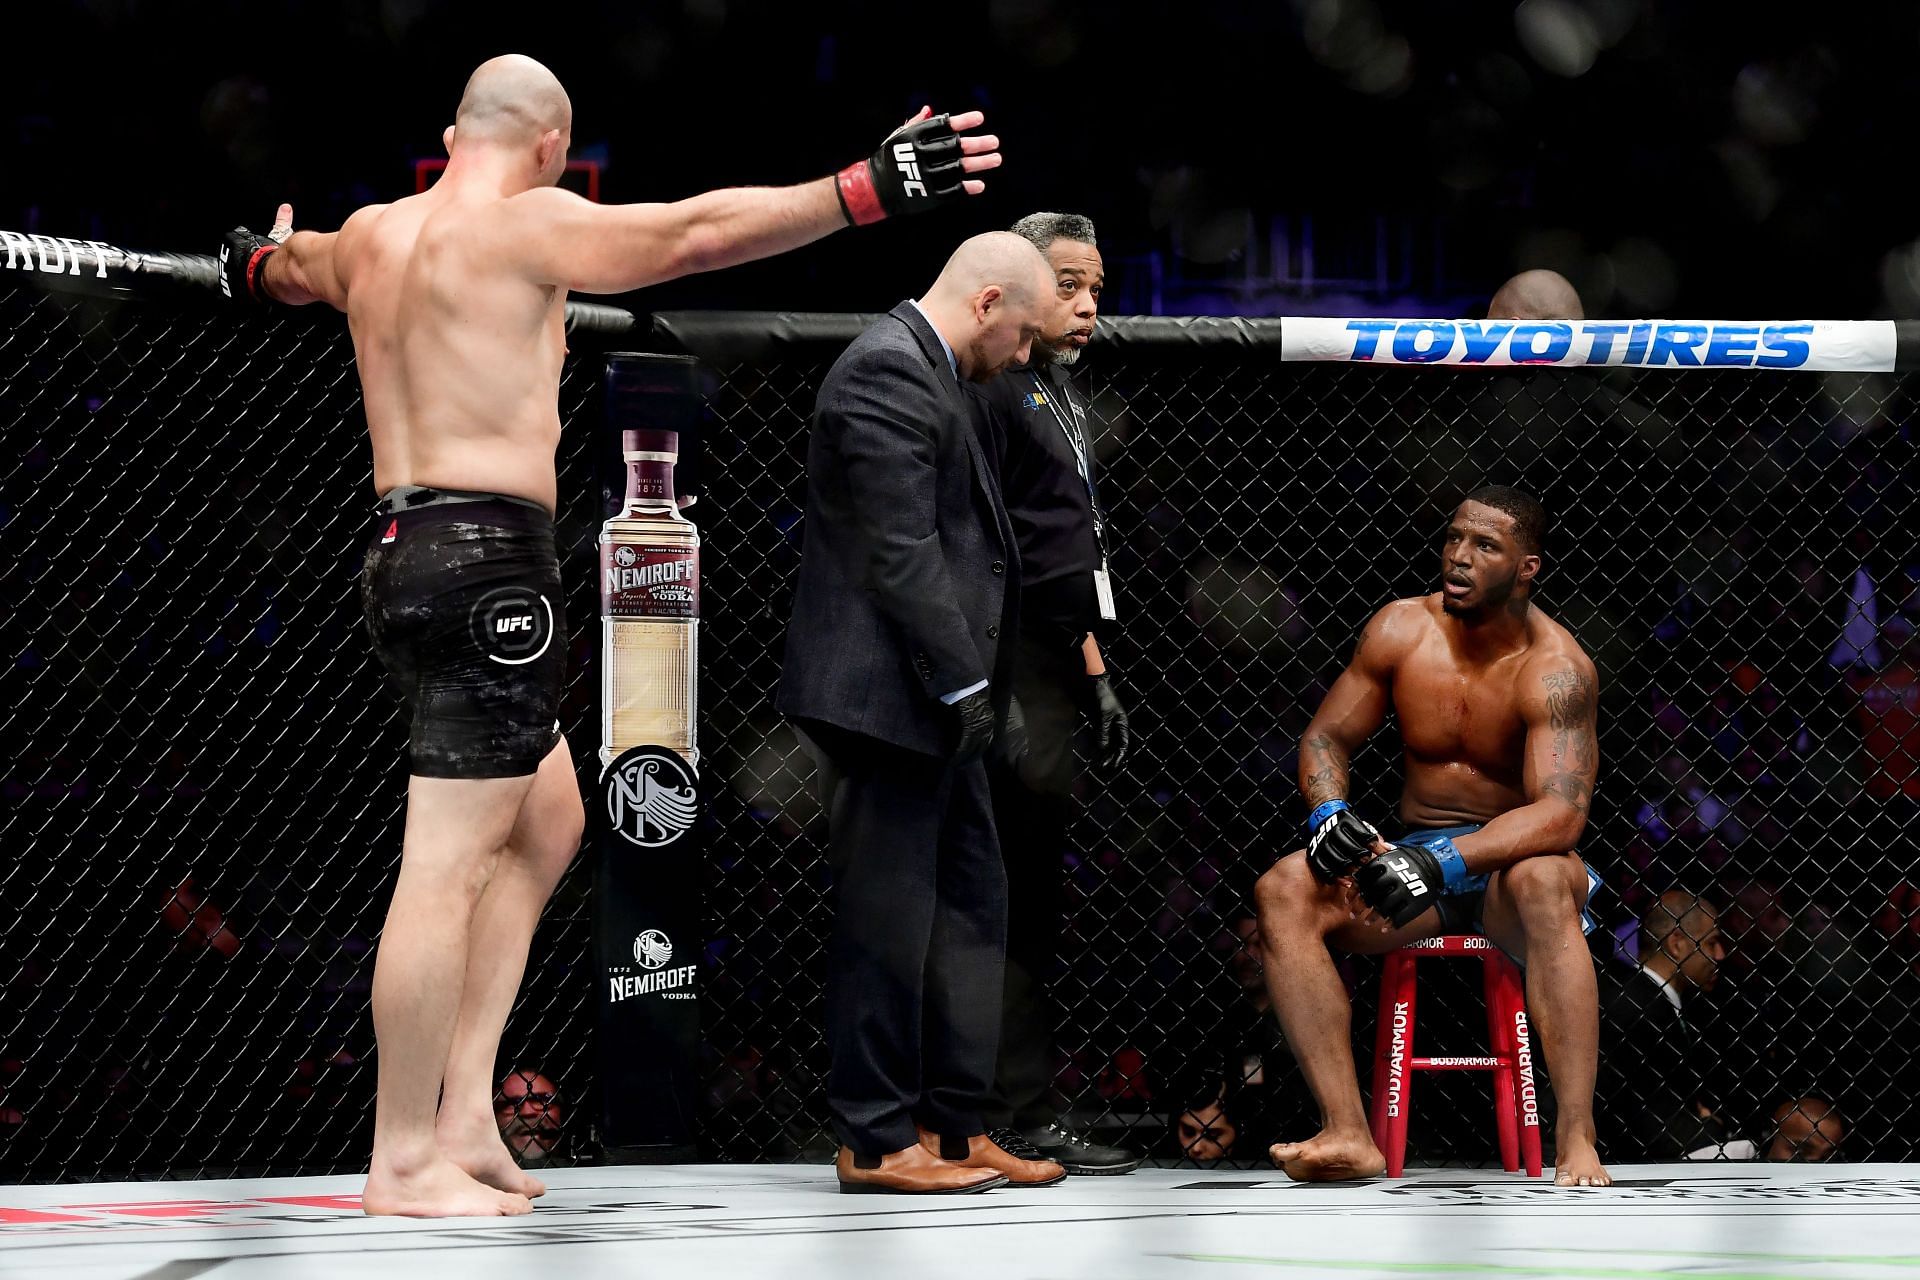 UFC Fight Night: Glover Teixeira at his violent best